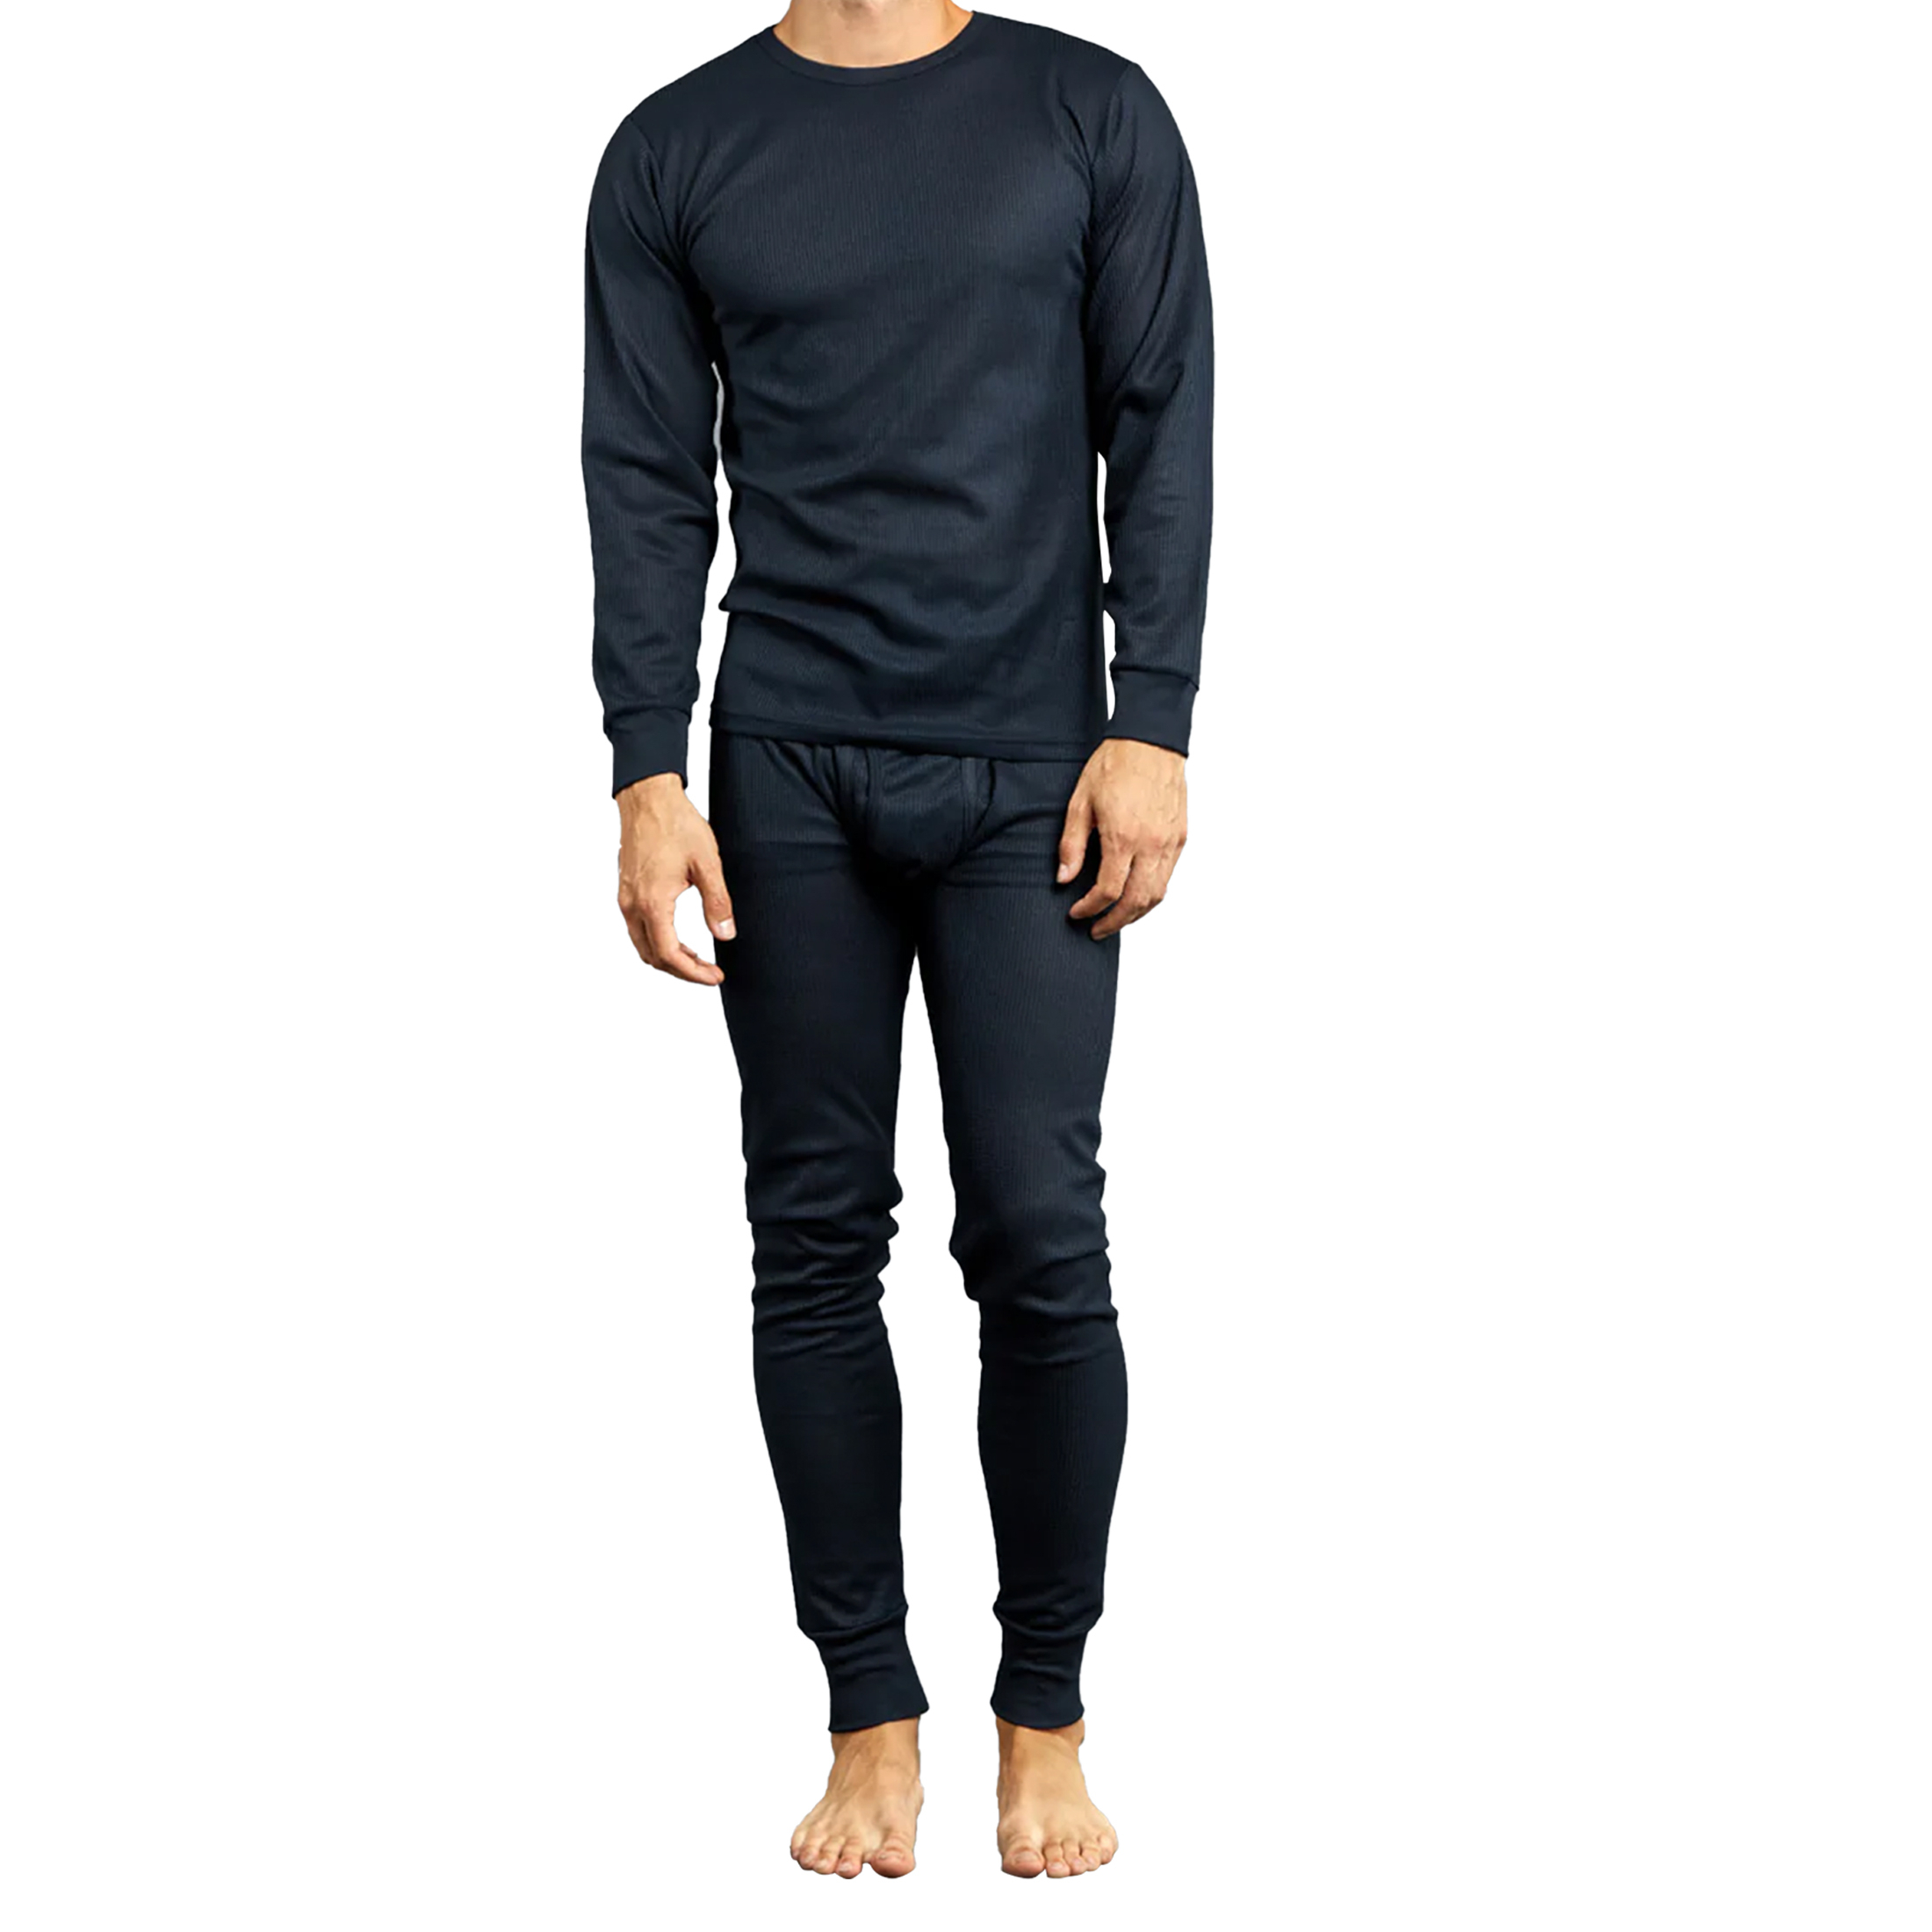 2-Piece: Men's Moisture Wicking Long Johns Base Layer Thermal Underwear Set (Top & Bottom) - Grey, Small